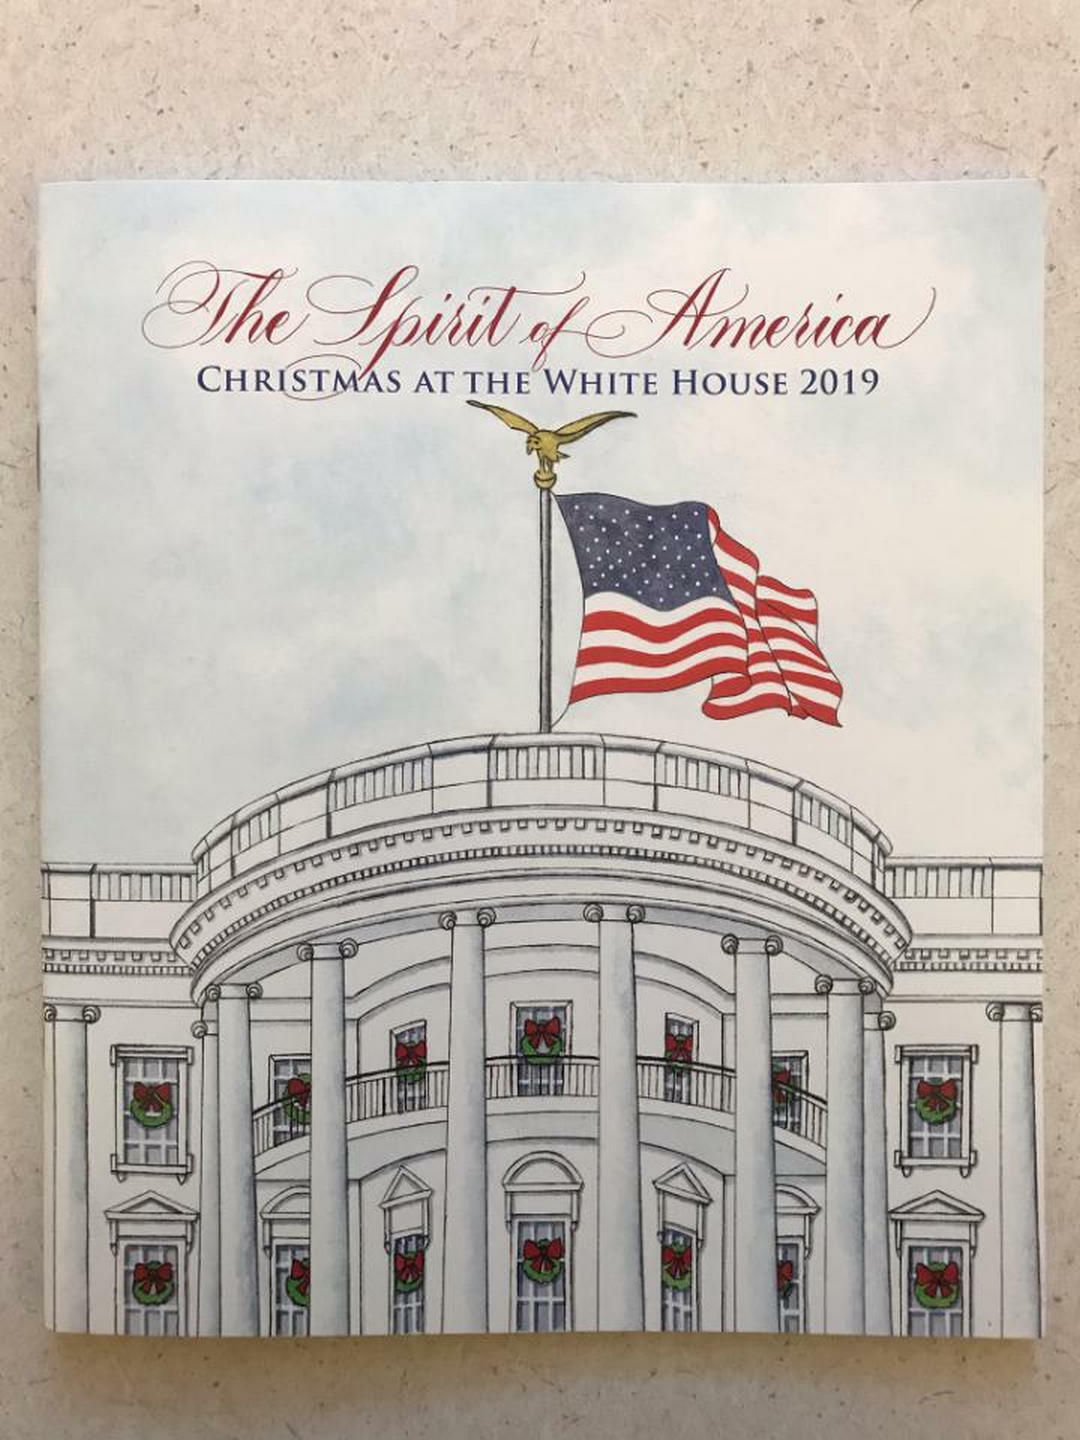 Donald Trump Melania 2019 White House Christmas Holidays Tour Book Program POTUS